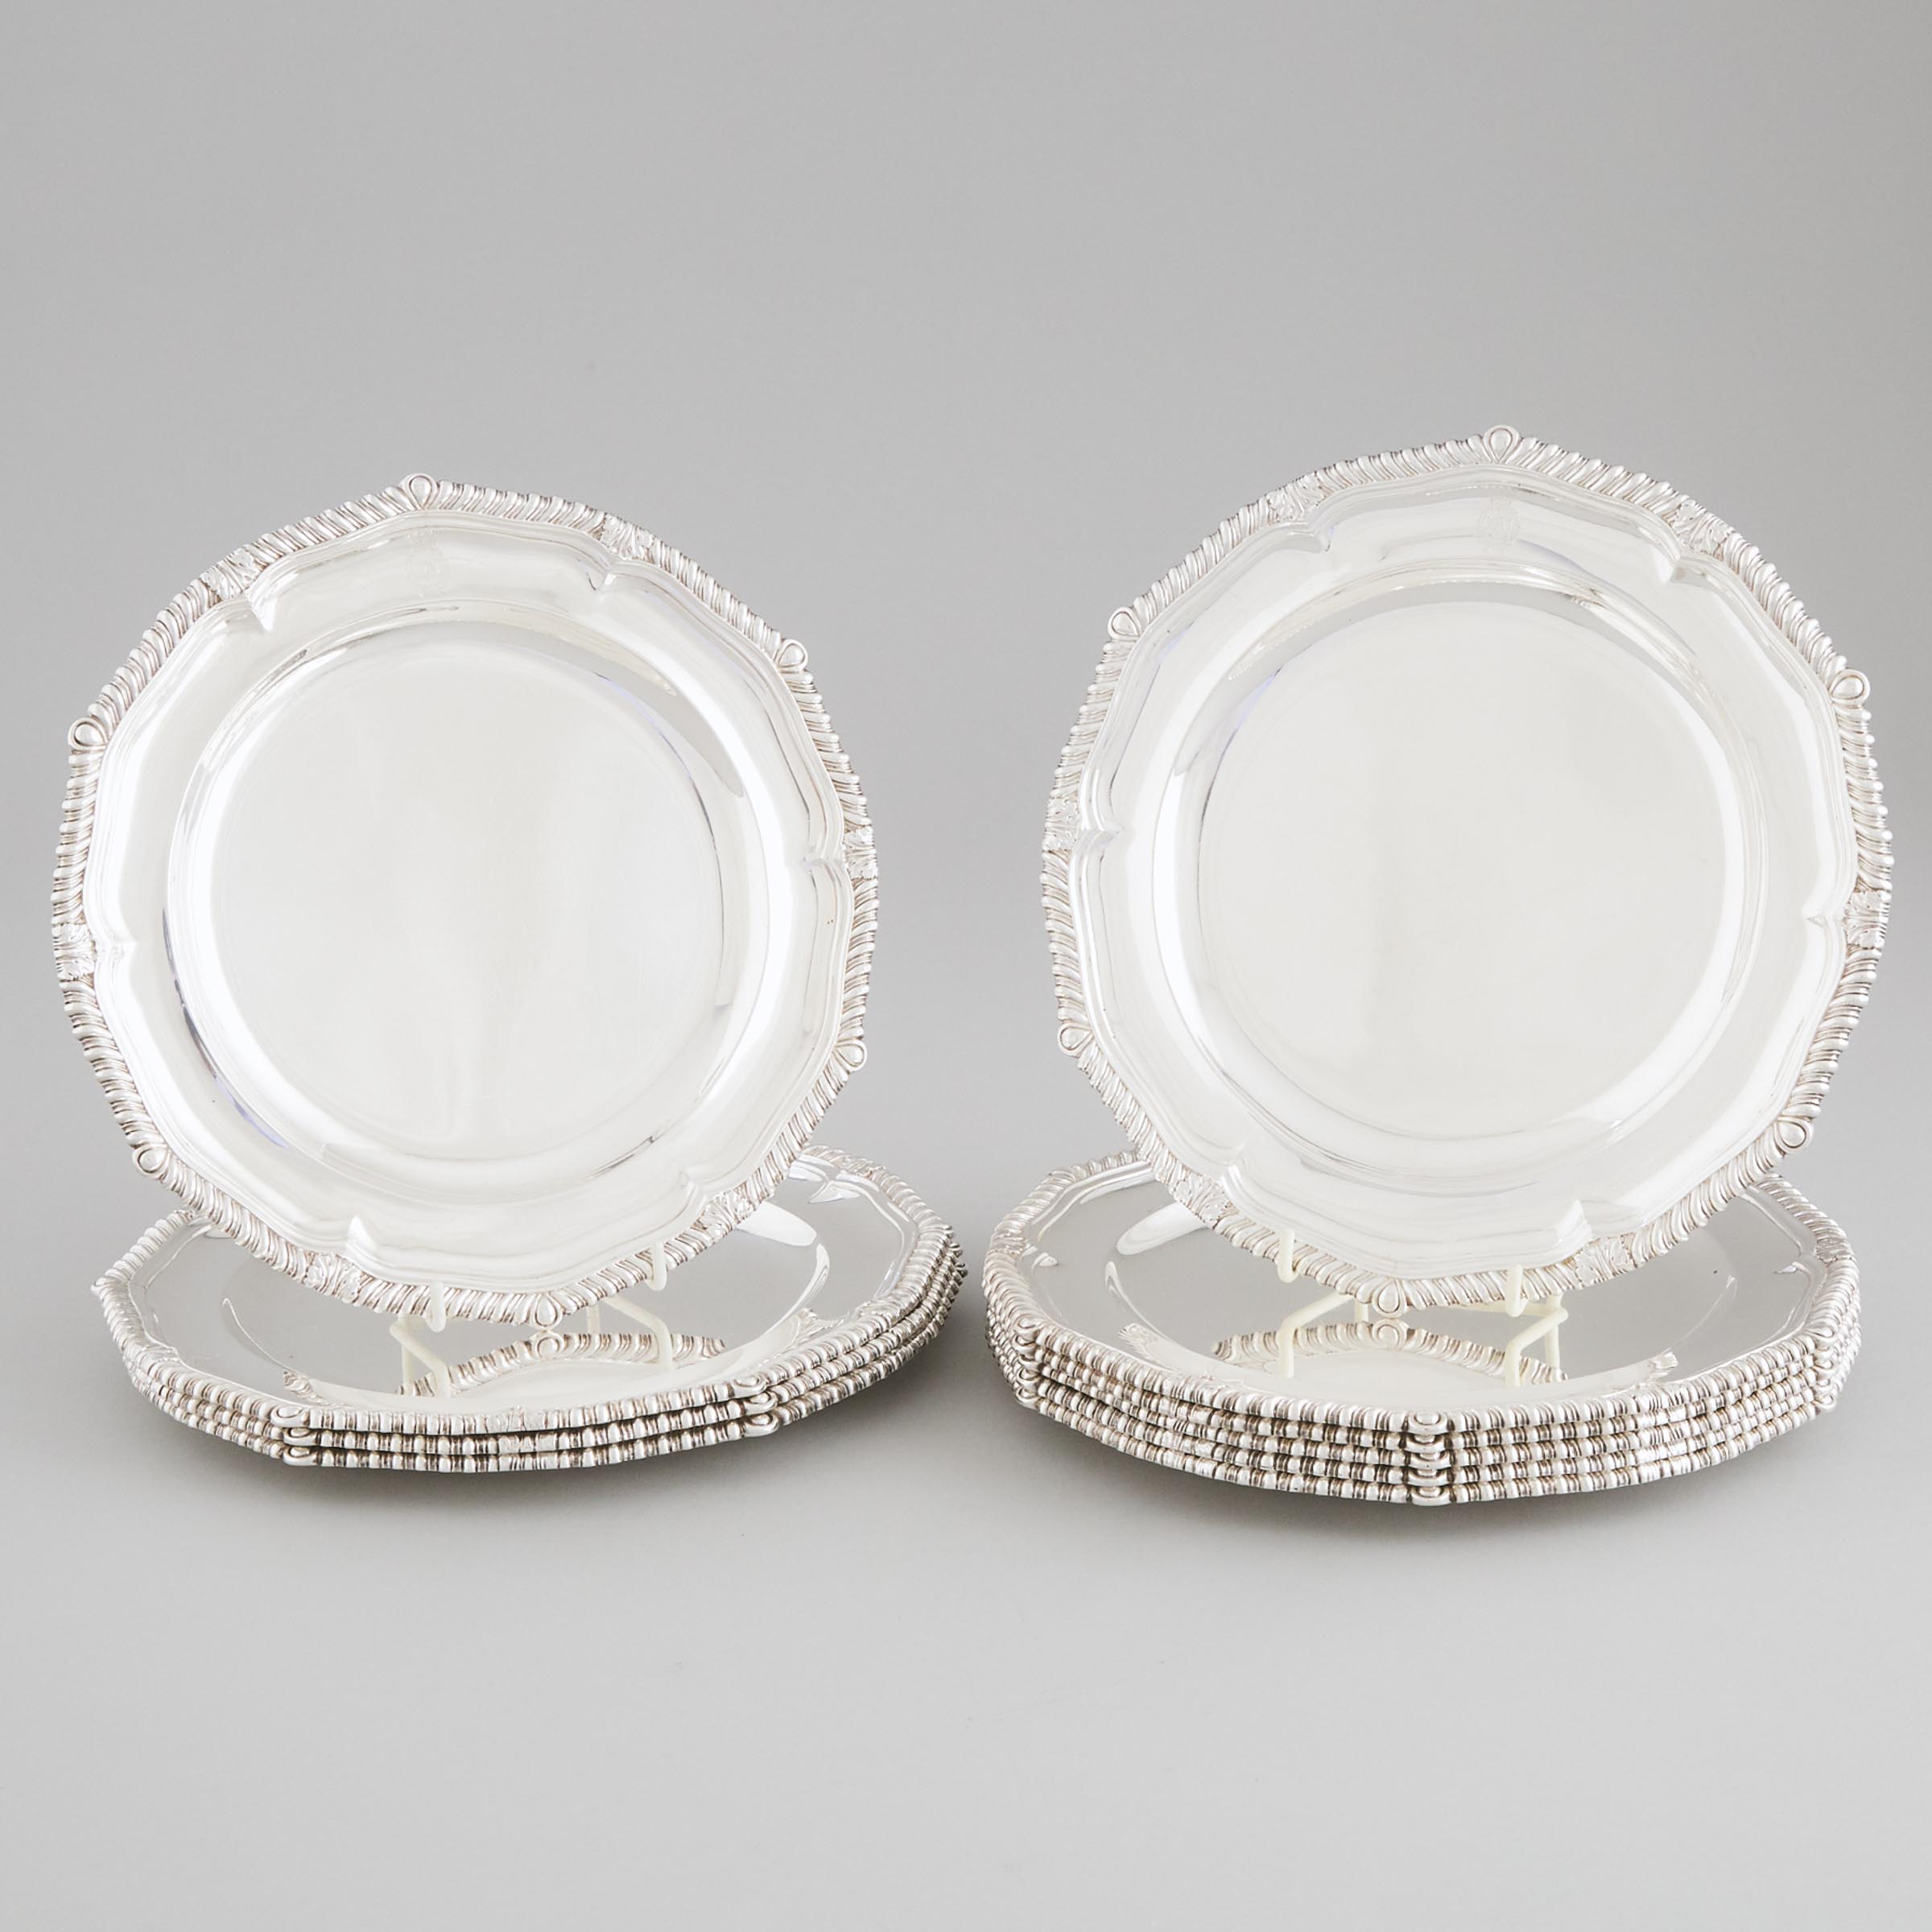 Set of Ten George III Silver Dinner Plates, Paul Storr, London, 1808/09